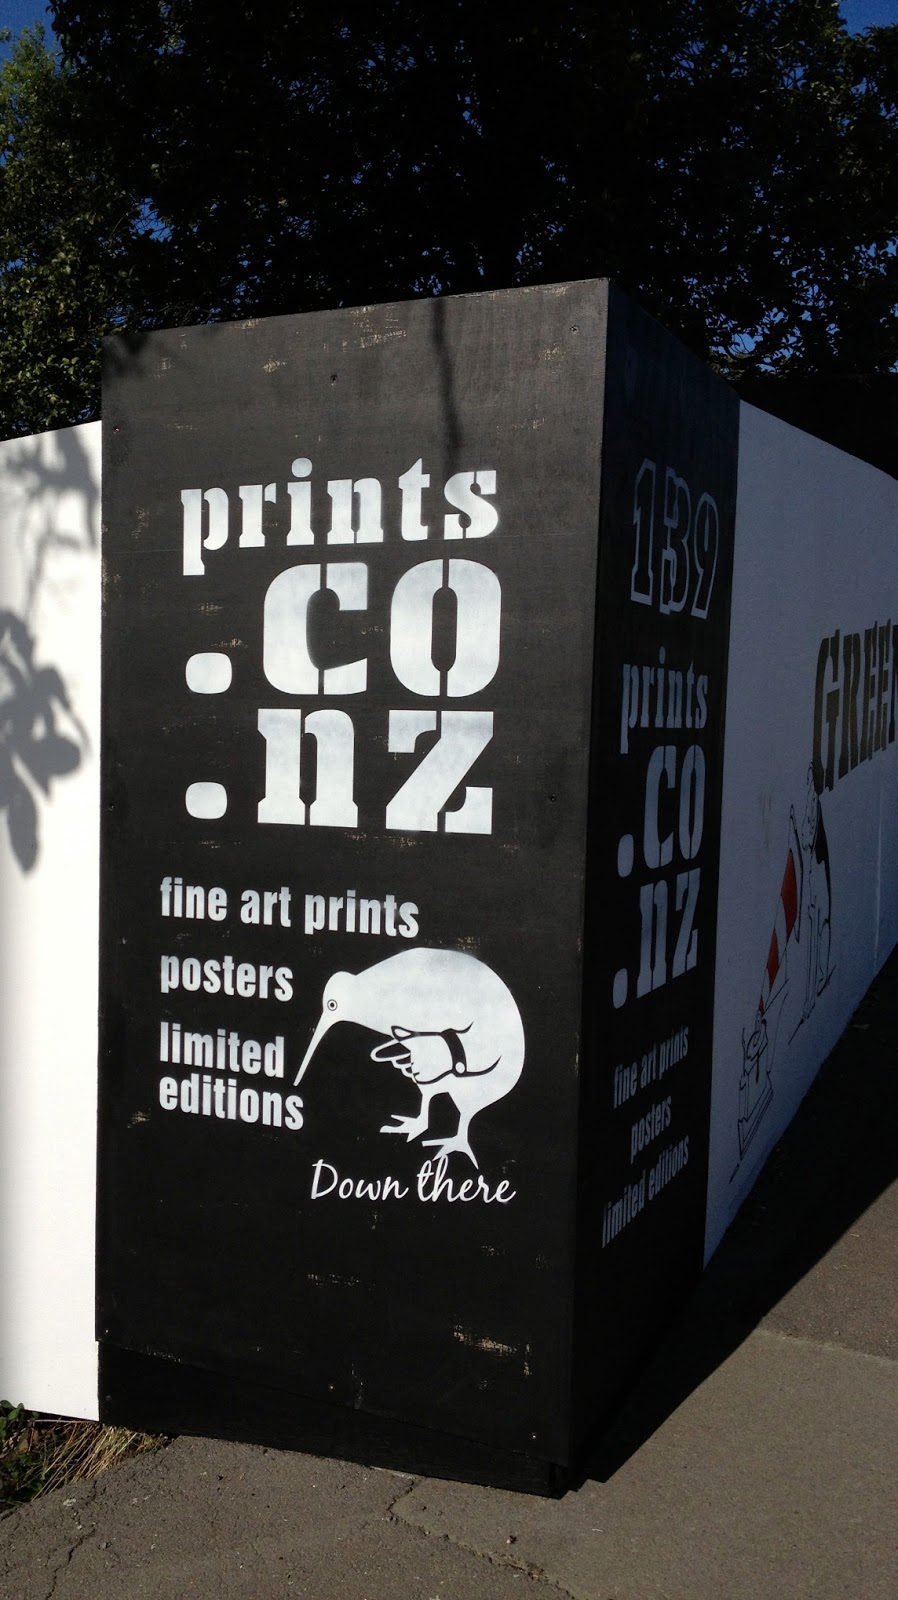 New Zealand Art Print News: NZ Fine Prints sells gallery's land to the